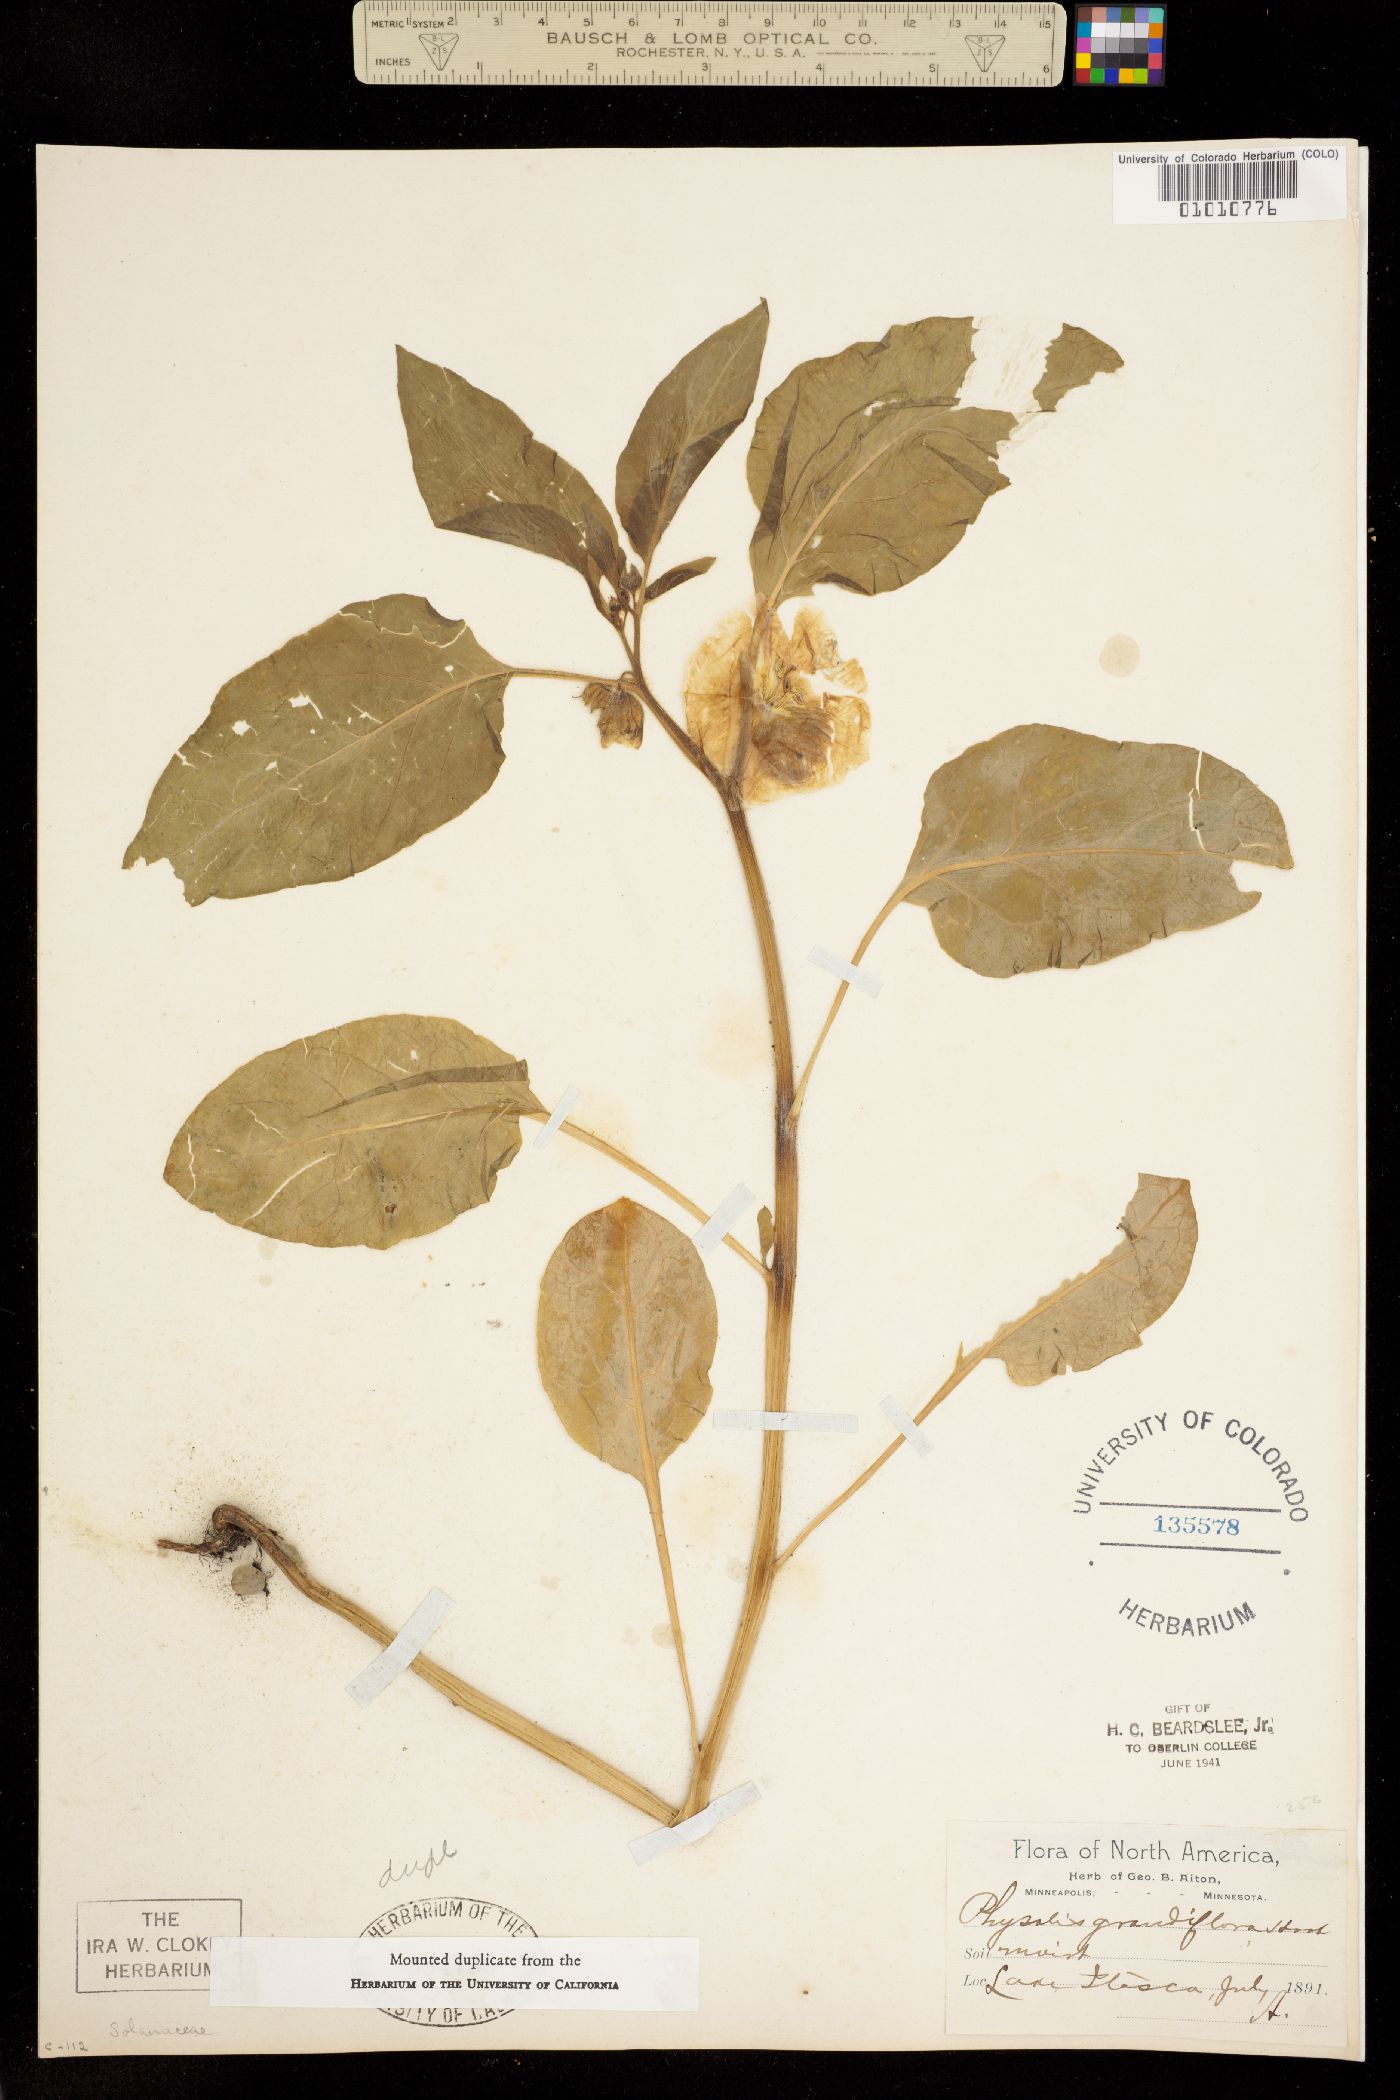 Physalis grandiflora image